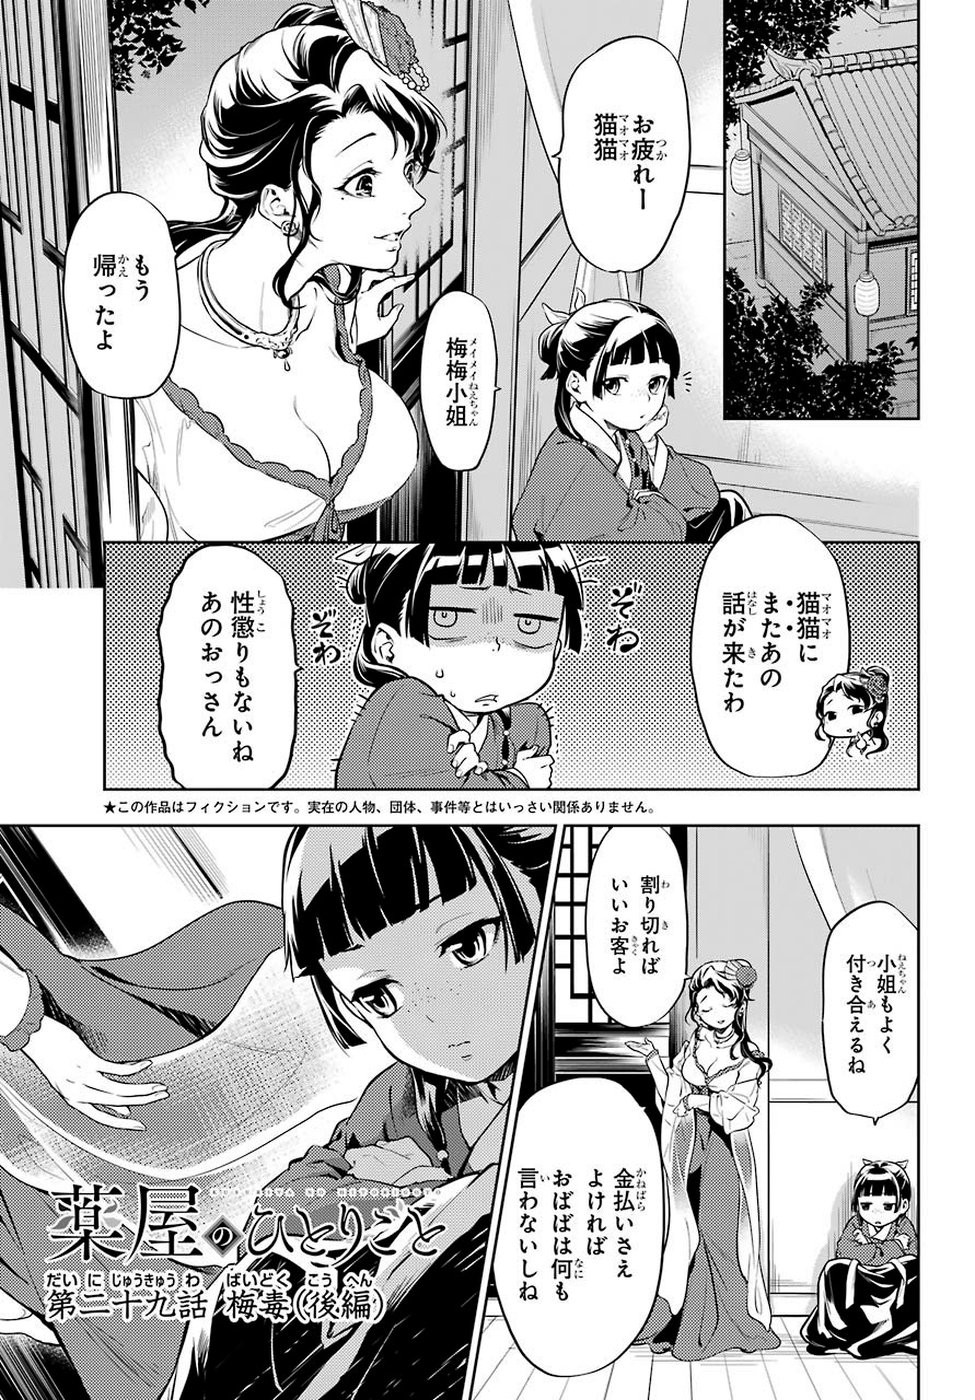 Kusuriya no Hitorigoto - Chapter 29.1 - Page 1